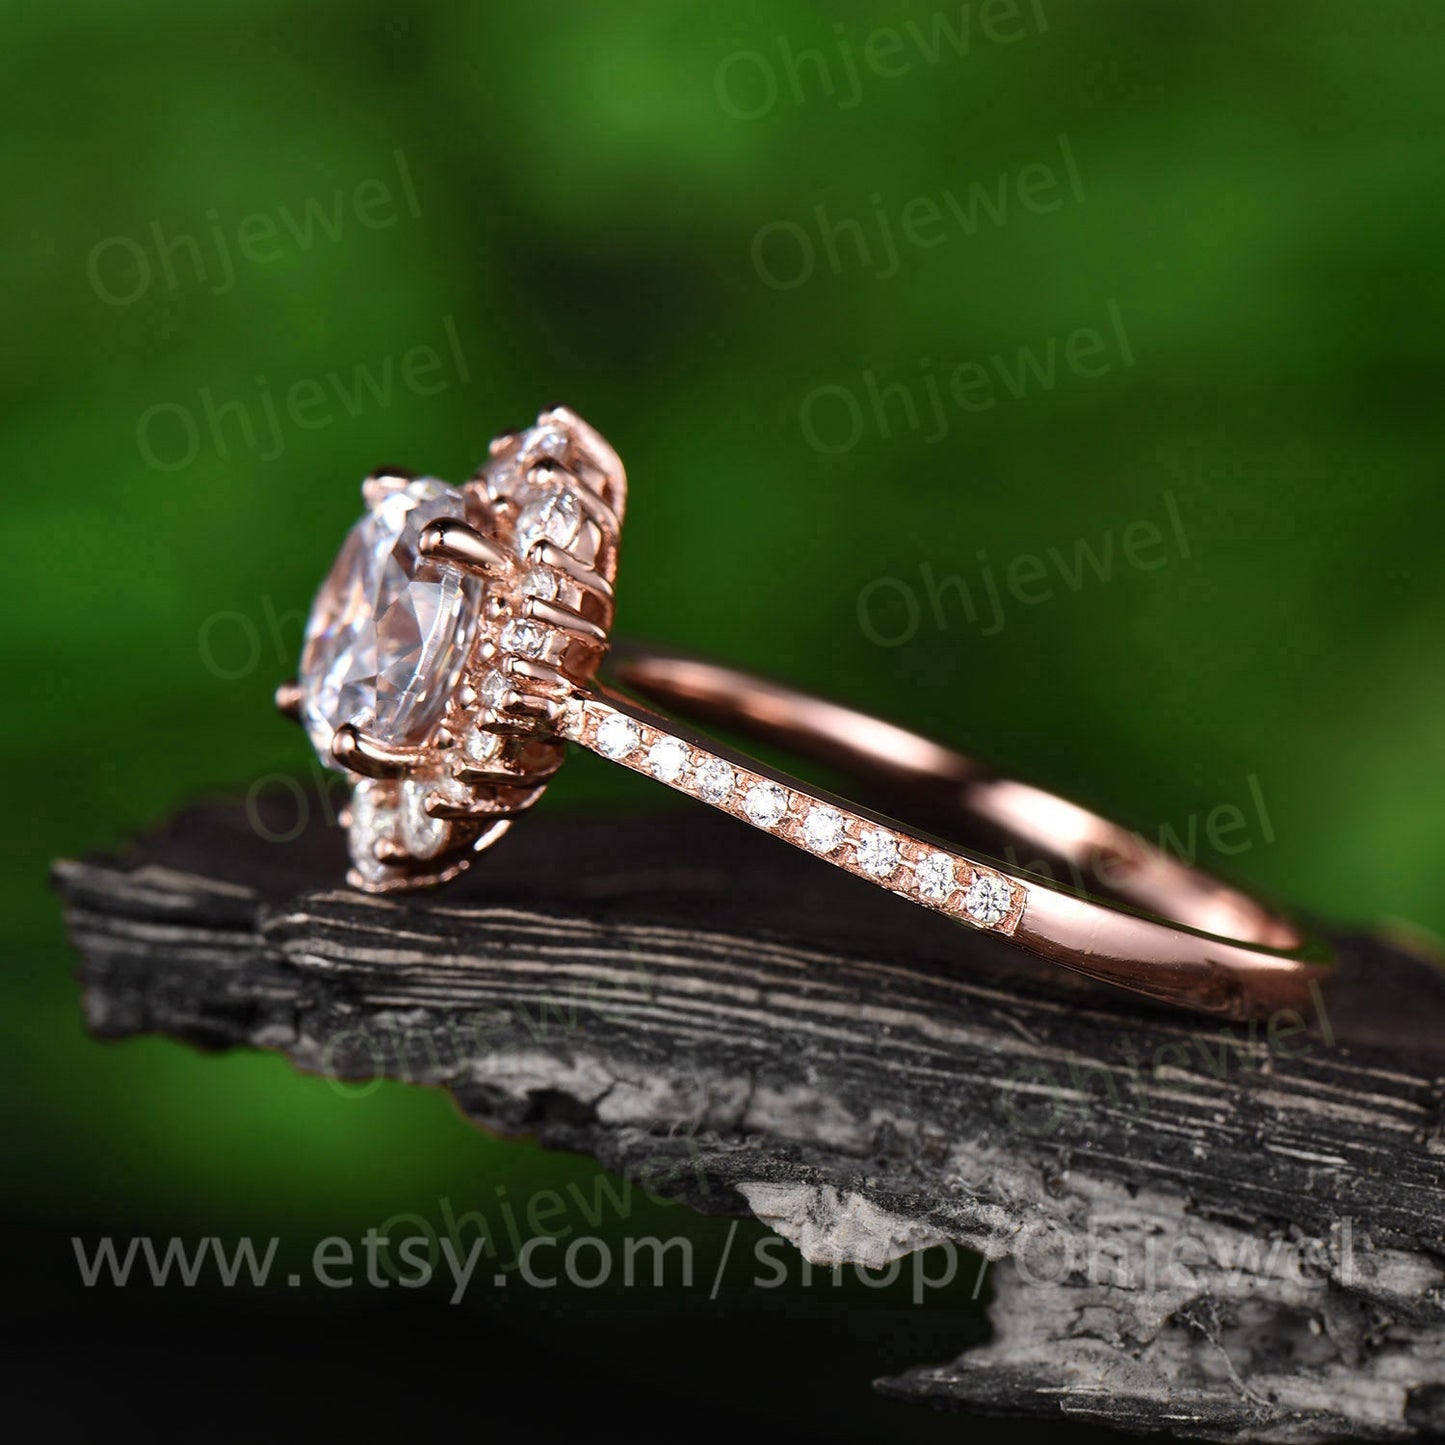 1ct brilliant moissanite engagement ring rose gold 14K/18K vintage moissanite halo ring for women jewelry unique gift half eternity ring